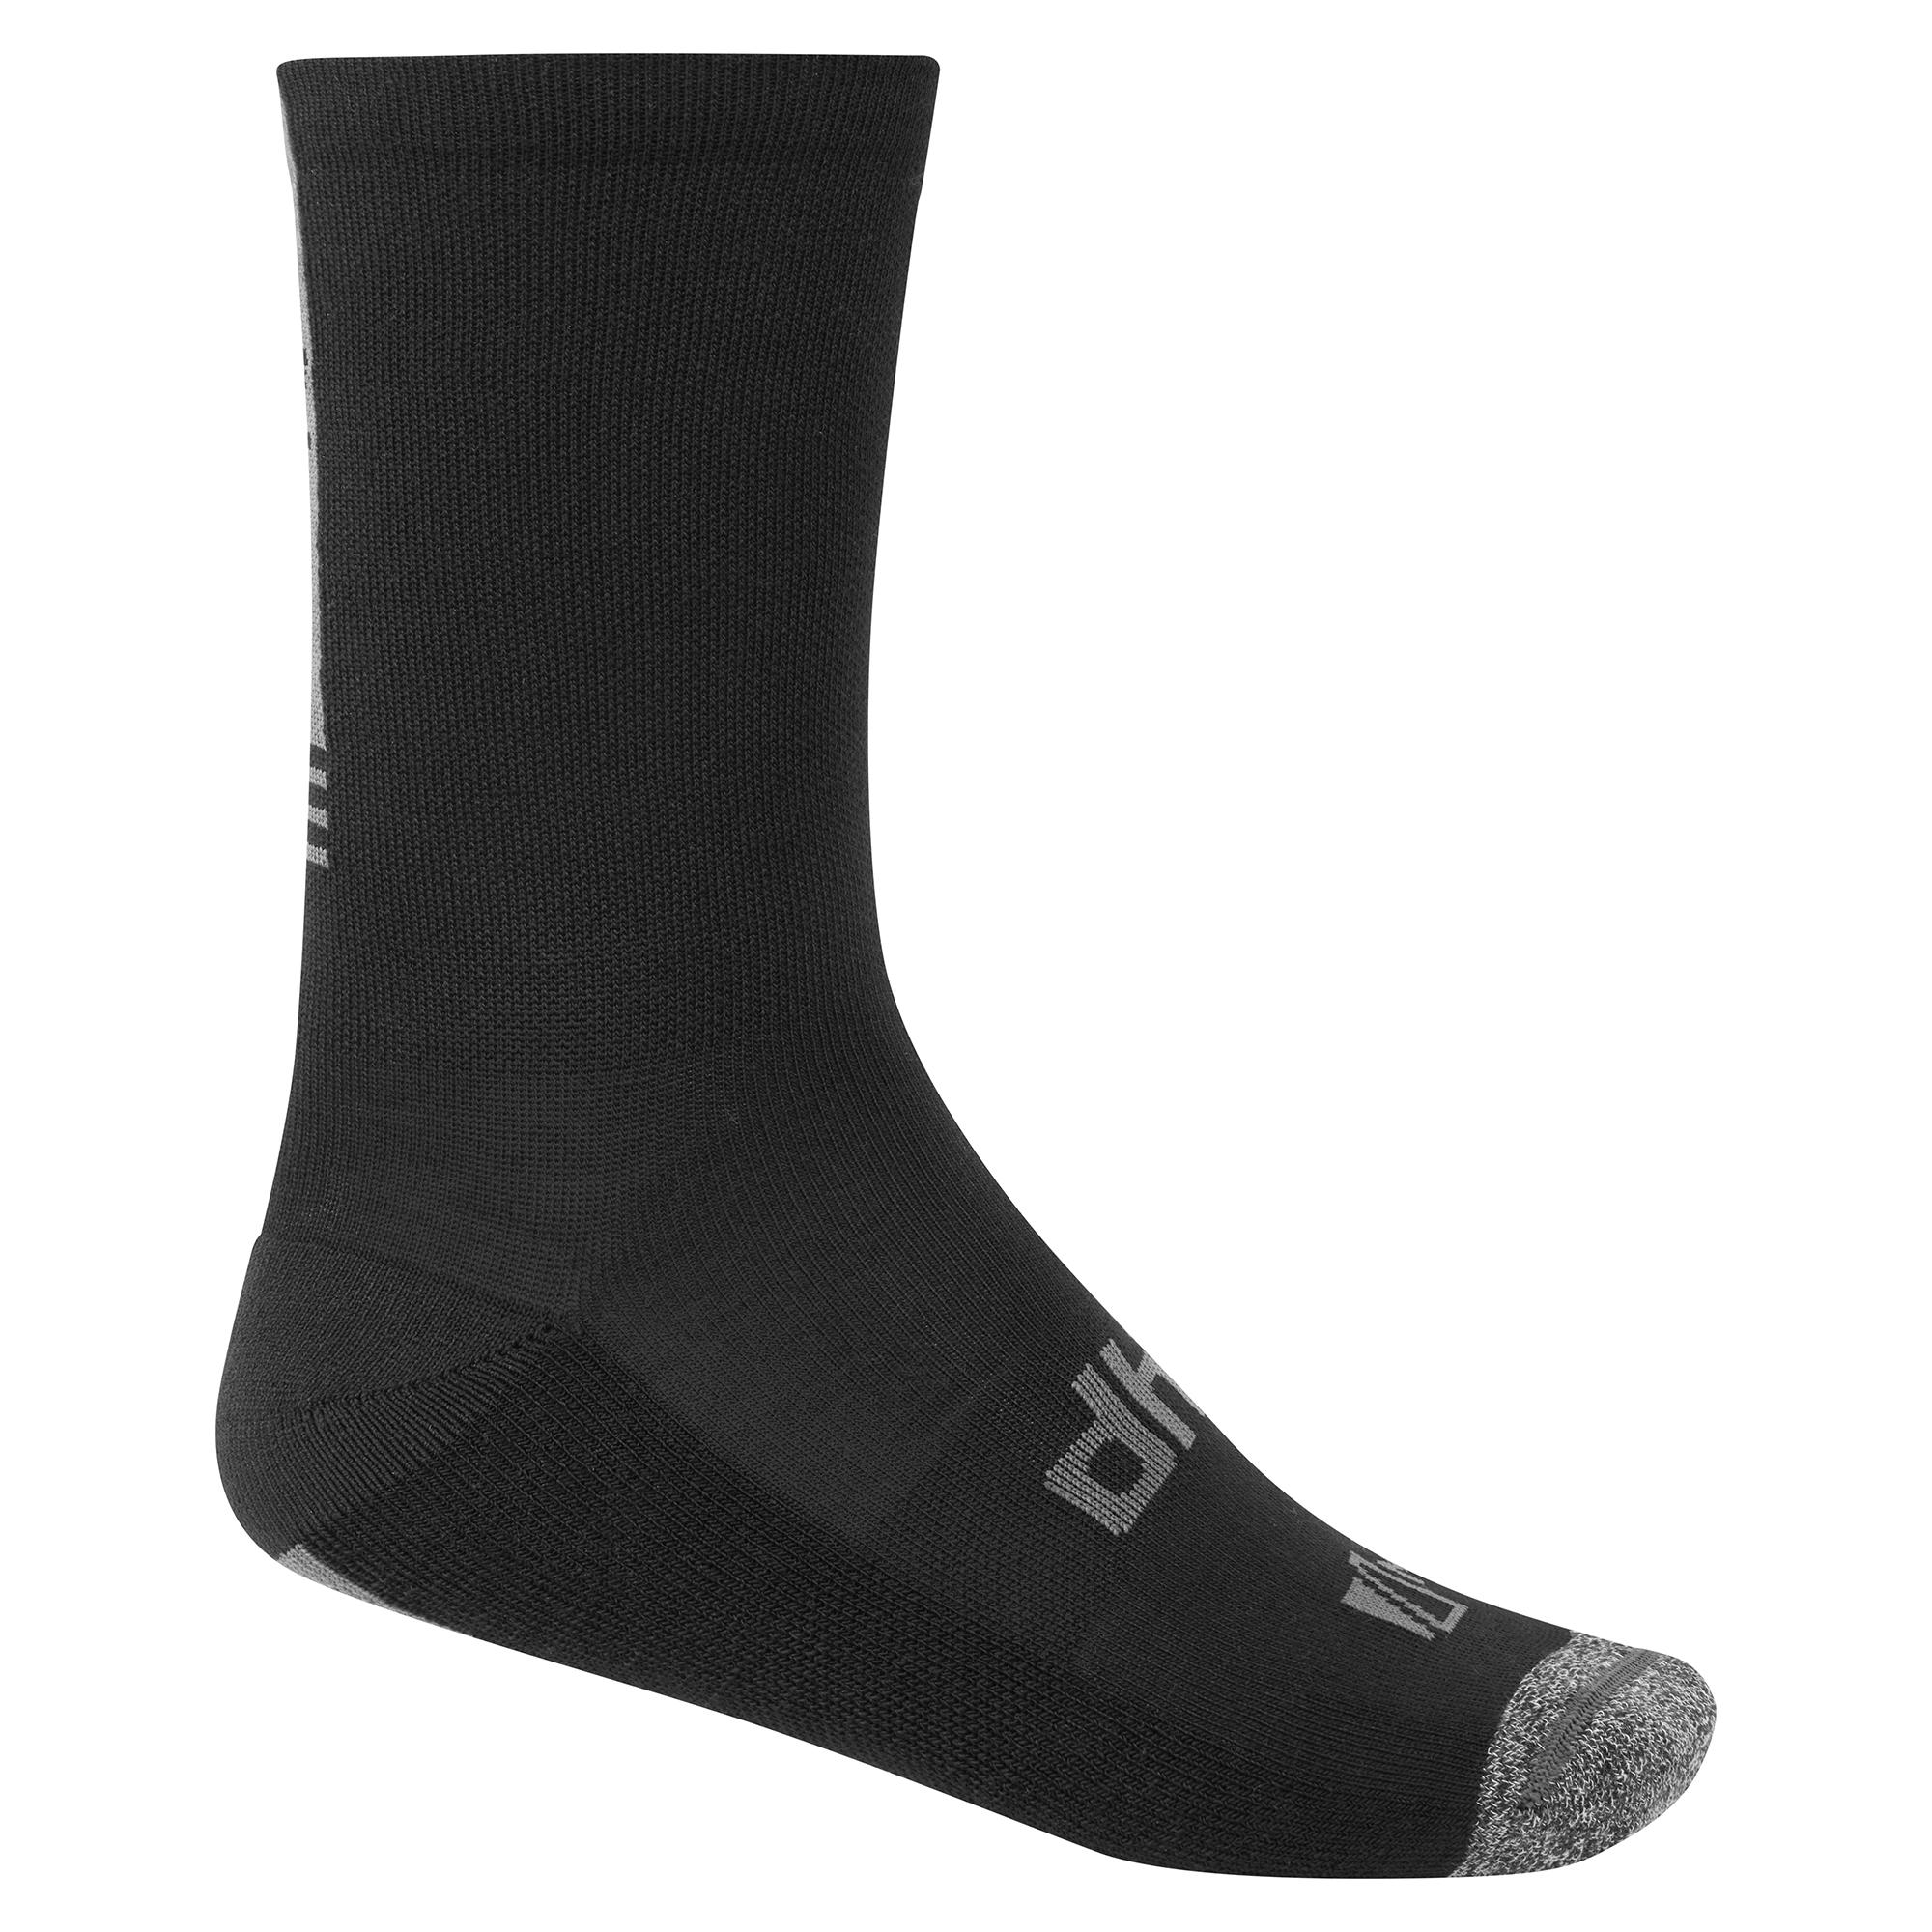 Dhb Aeron Winter Weight Merino Sock 2.0 - Black/grey